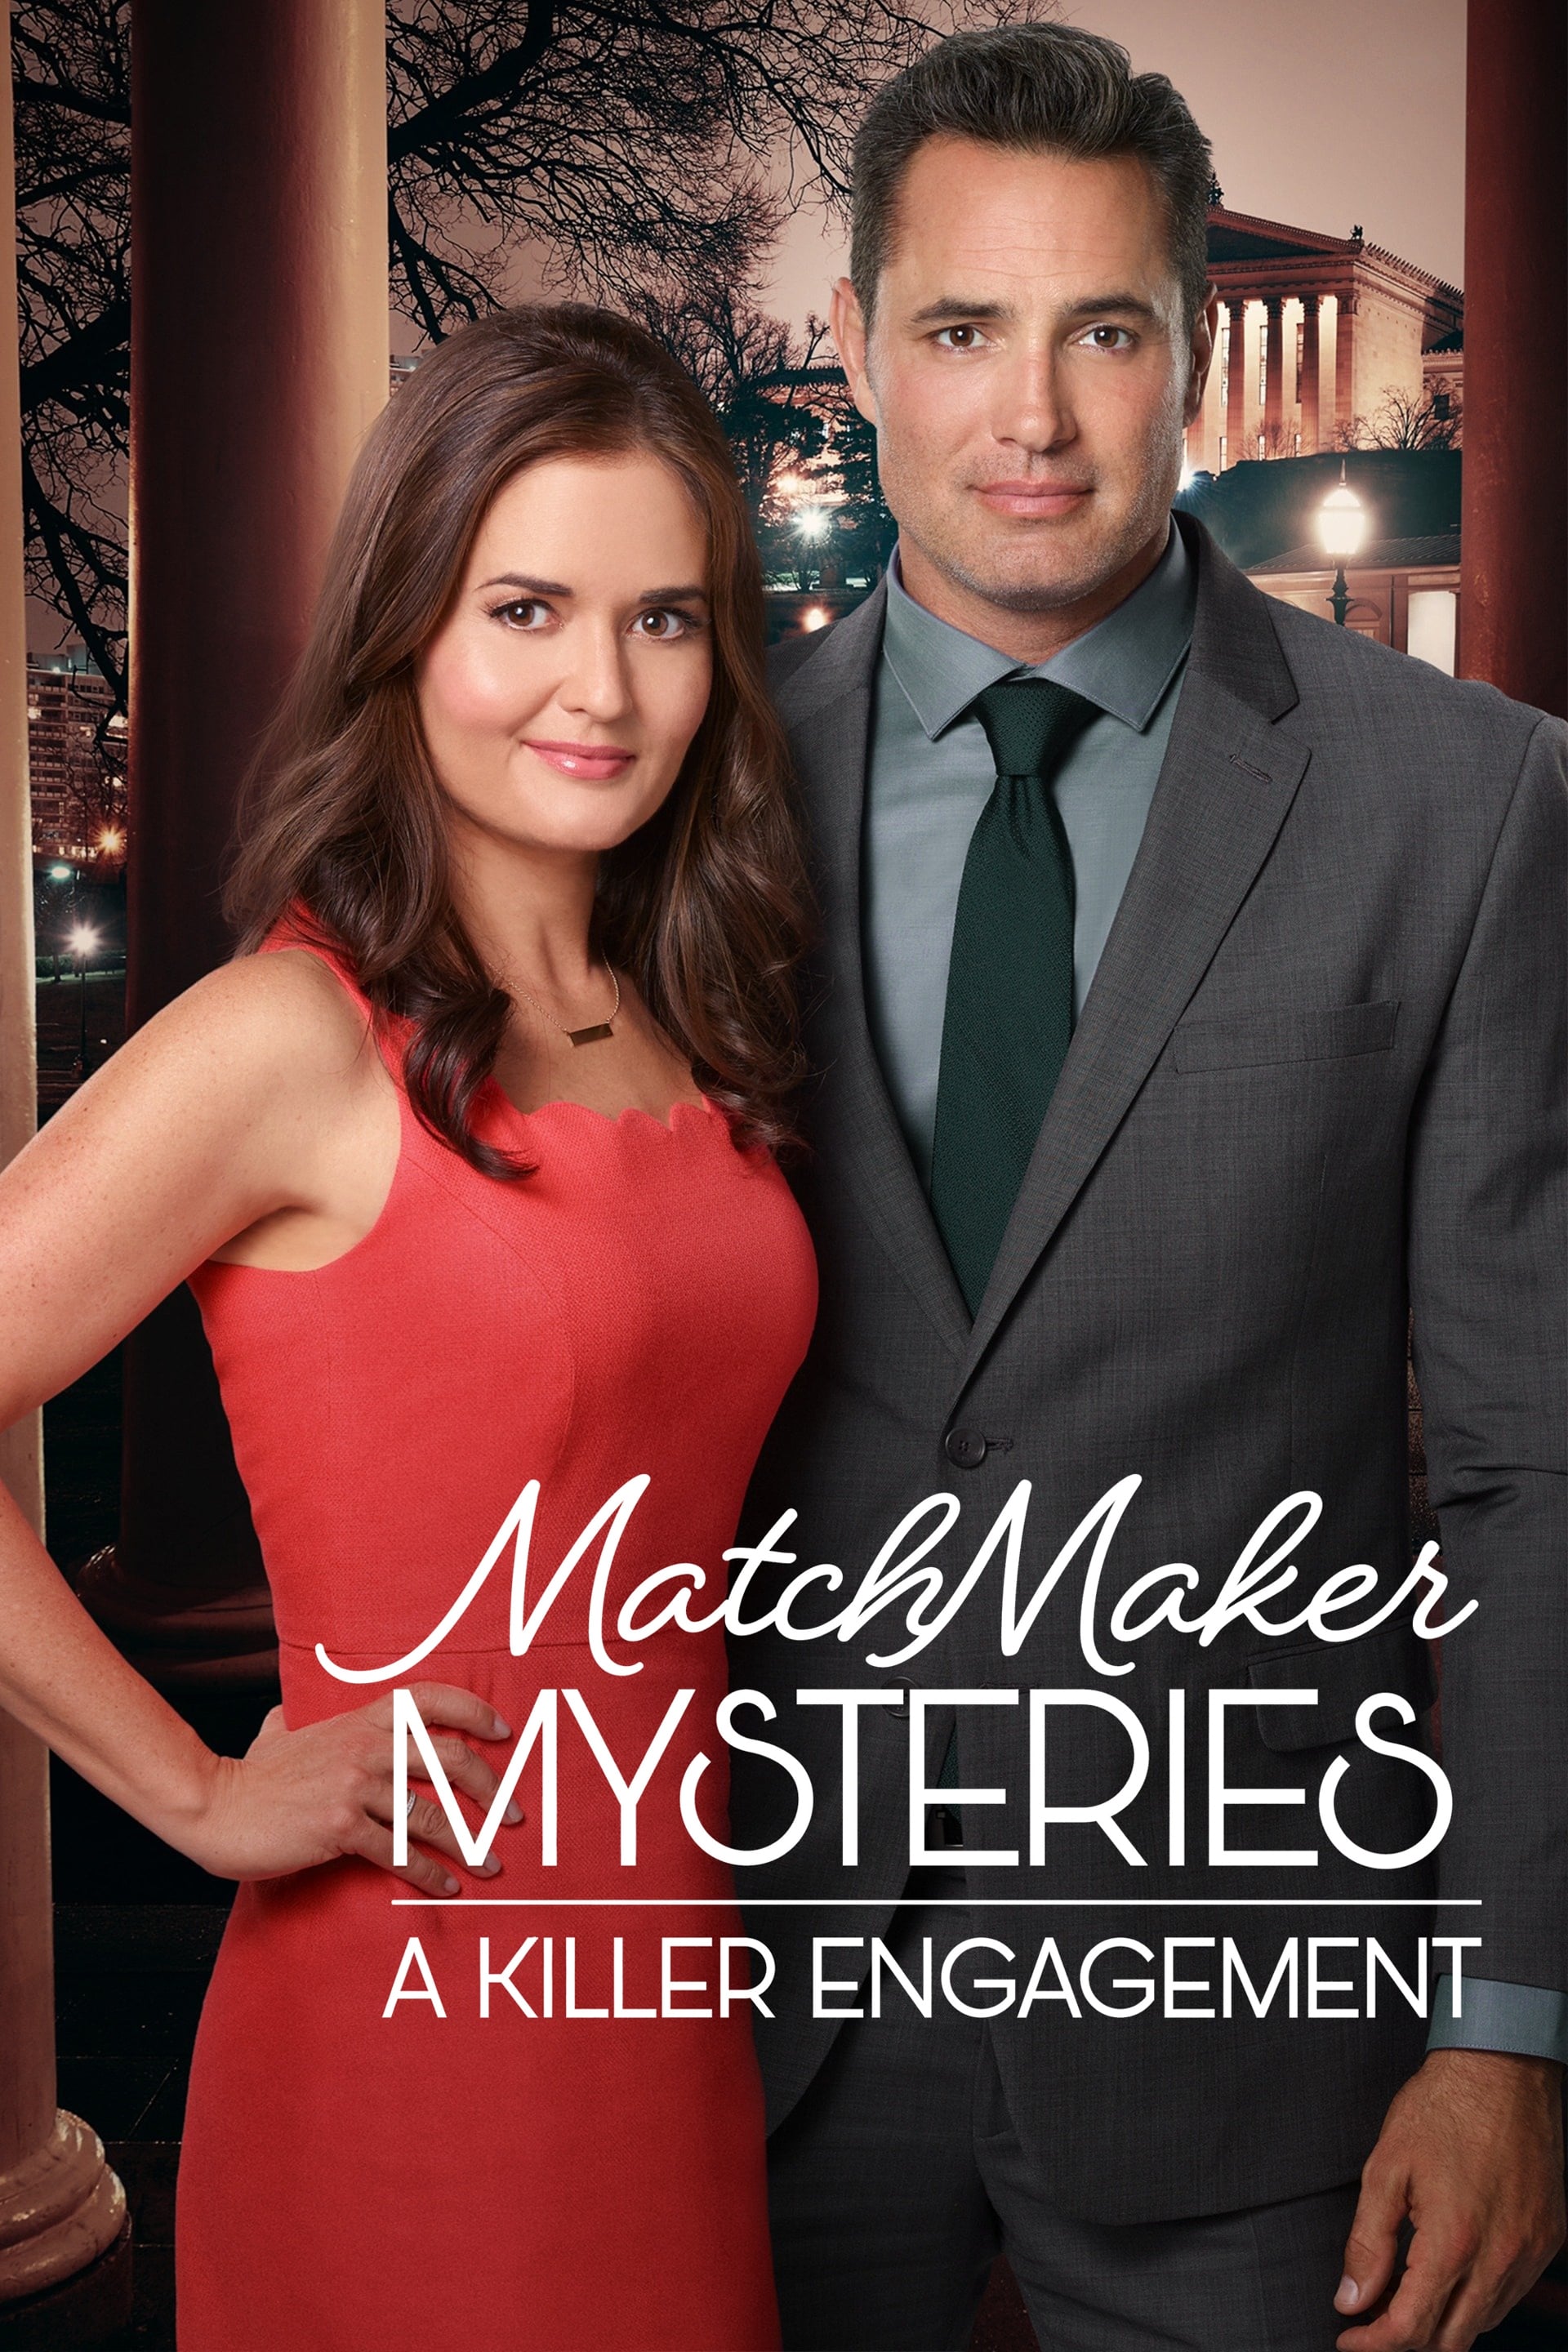 MatchMaker Mysteries: Verliebt, verlobt, verhaftet